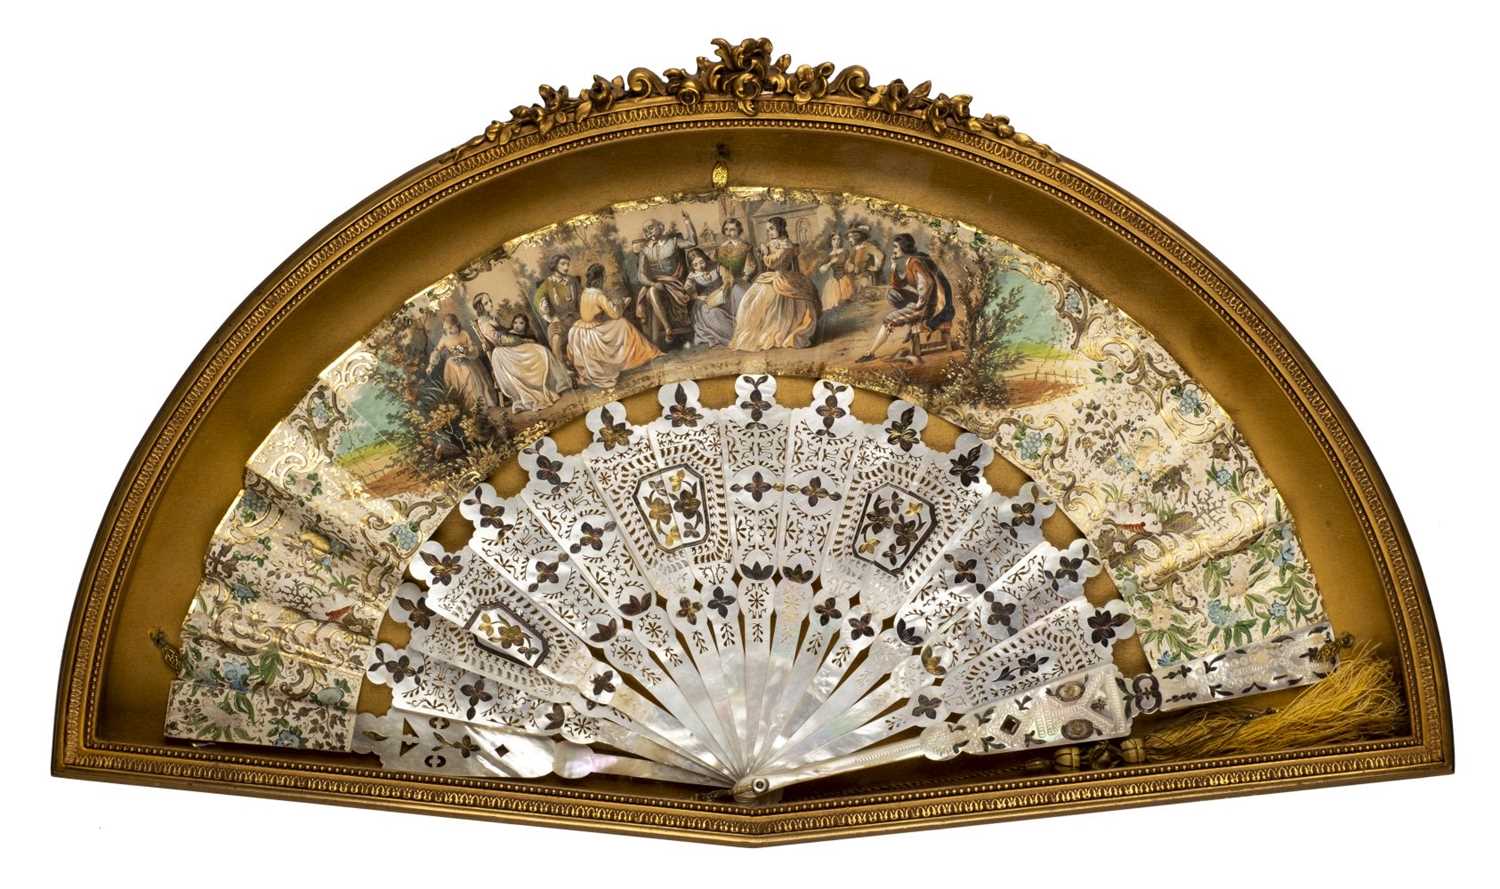 Lot 272 - Fan. A lithographed fan, late 19th century